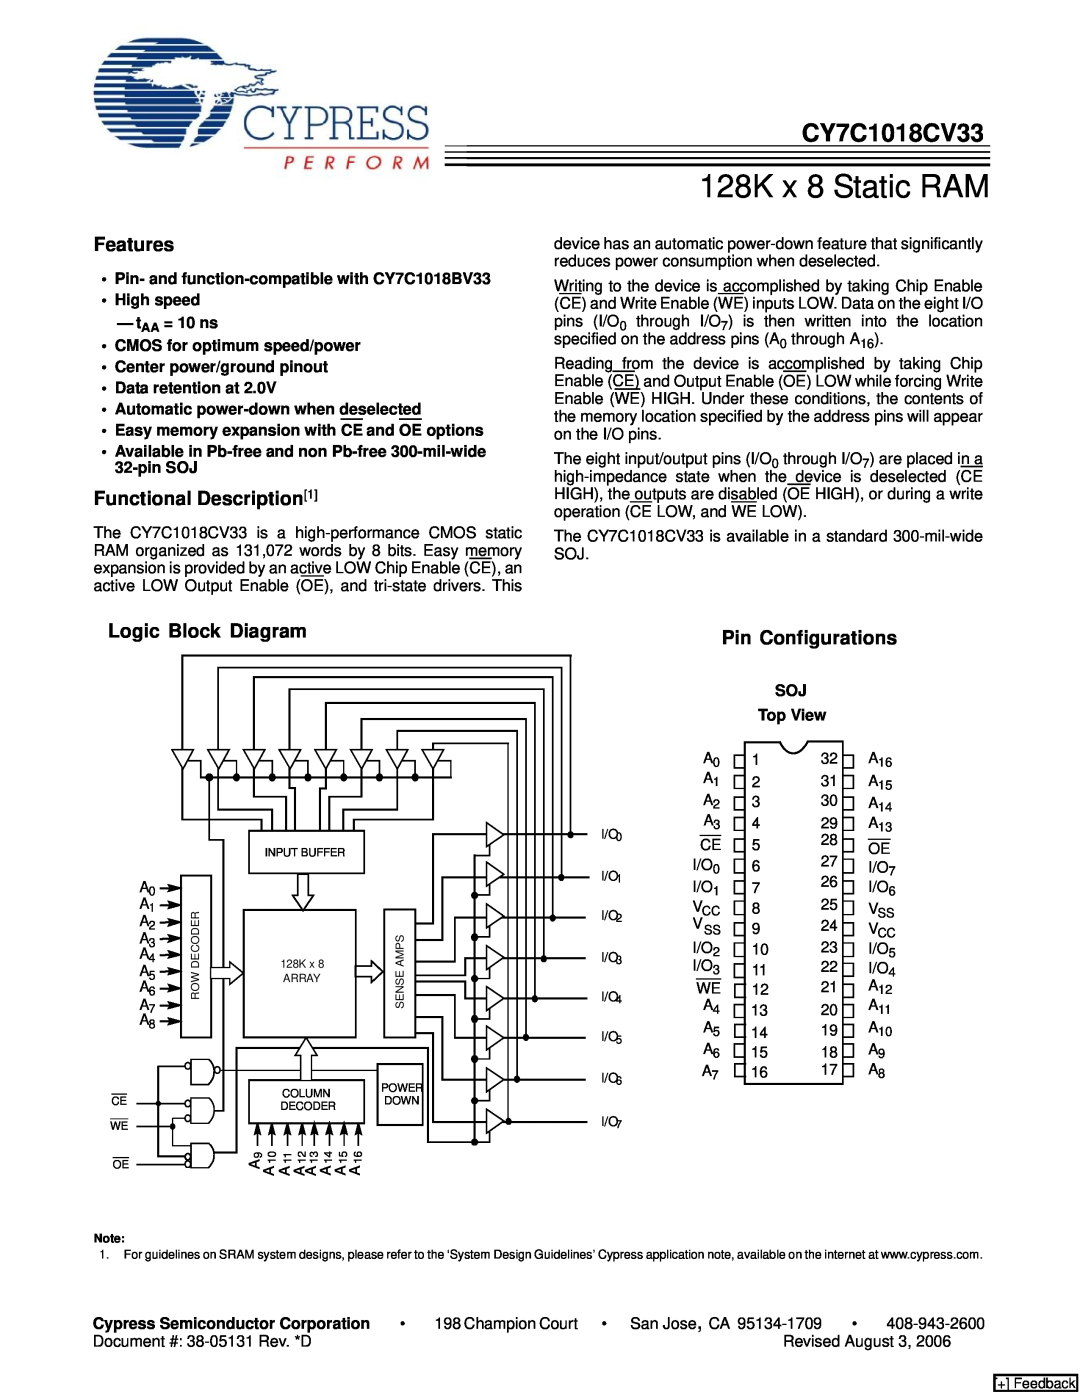 Cypress CY7C1018CV33 manual Features, Functional Description1, Logic Block Diagram, Pin Configurations, Top View 